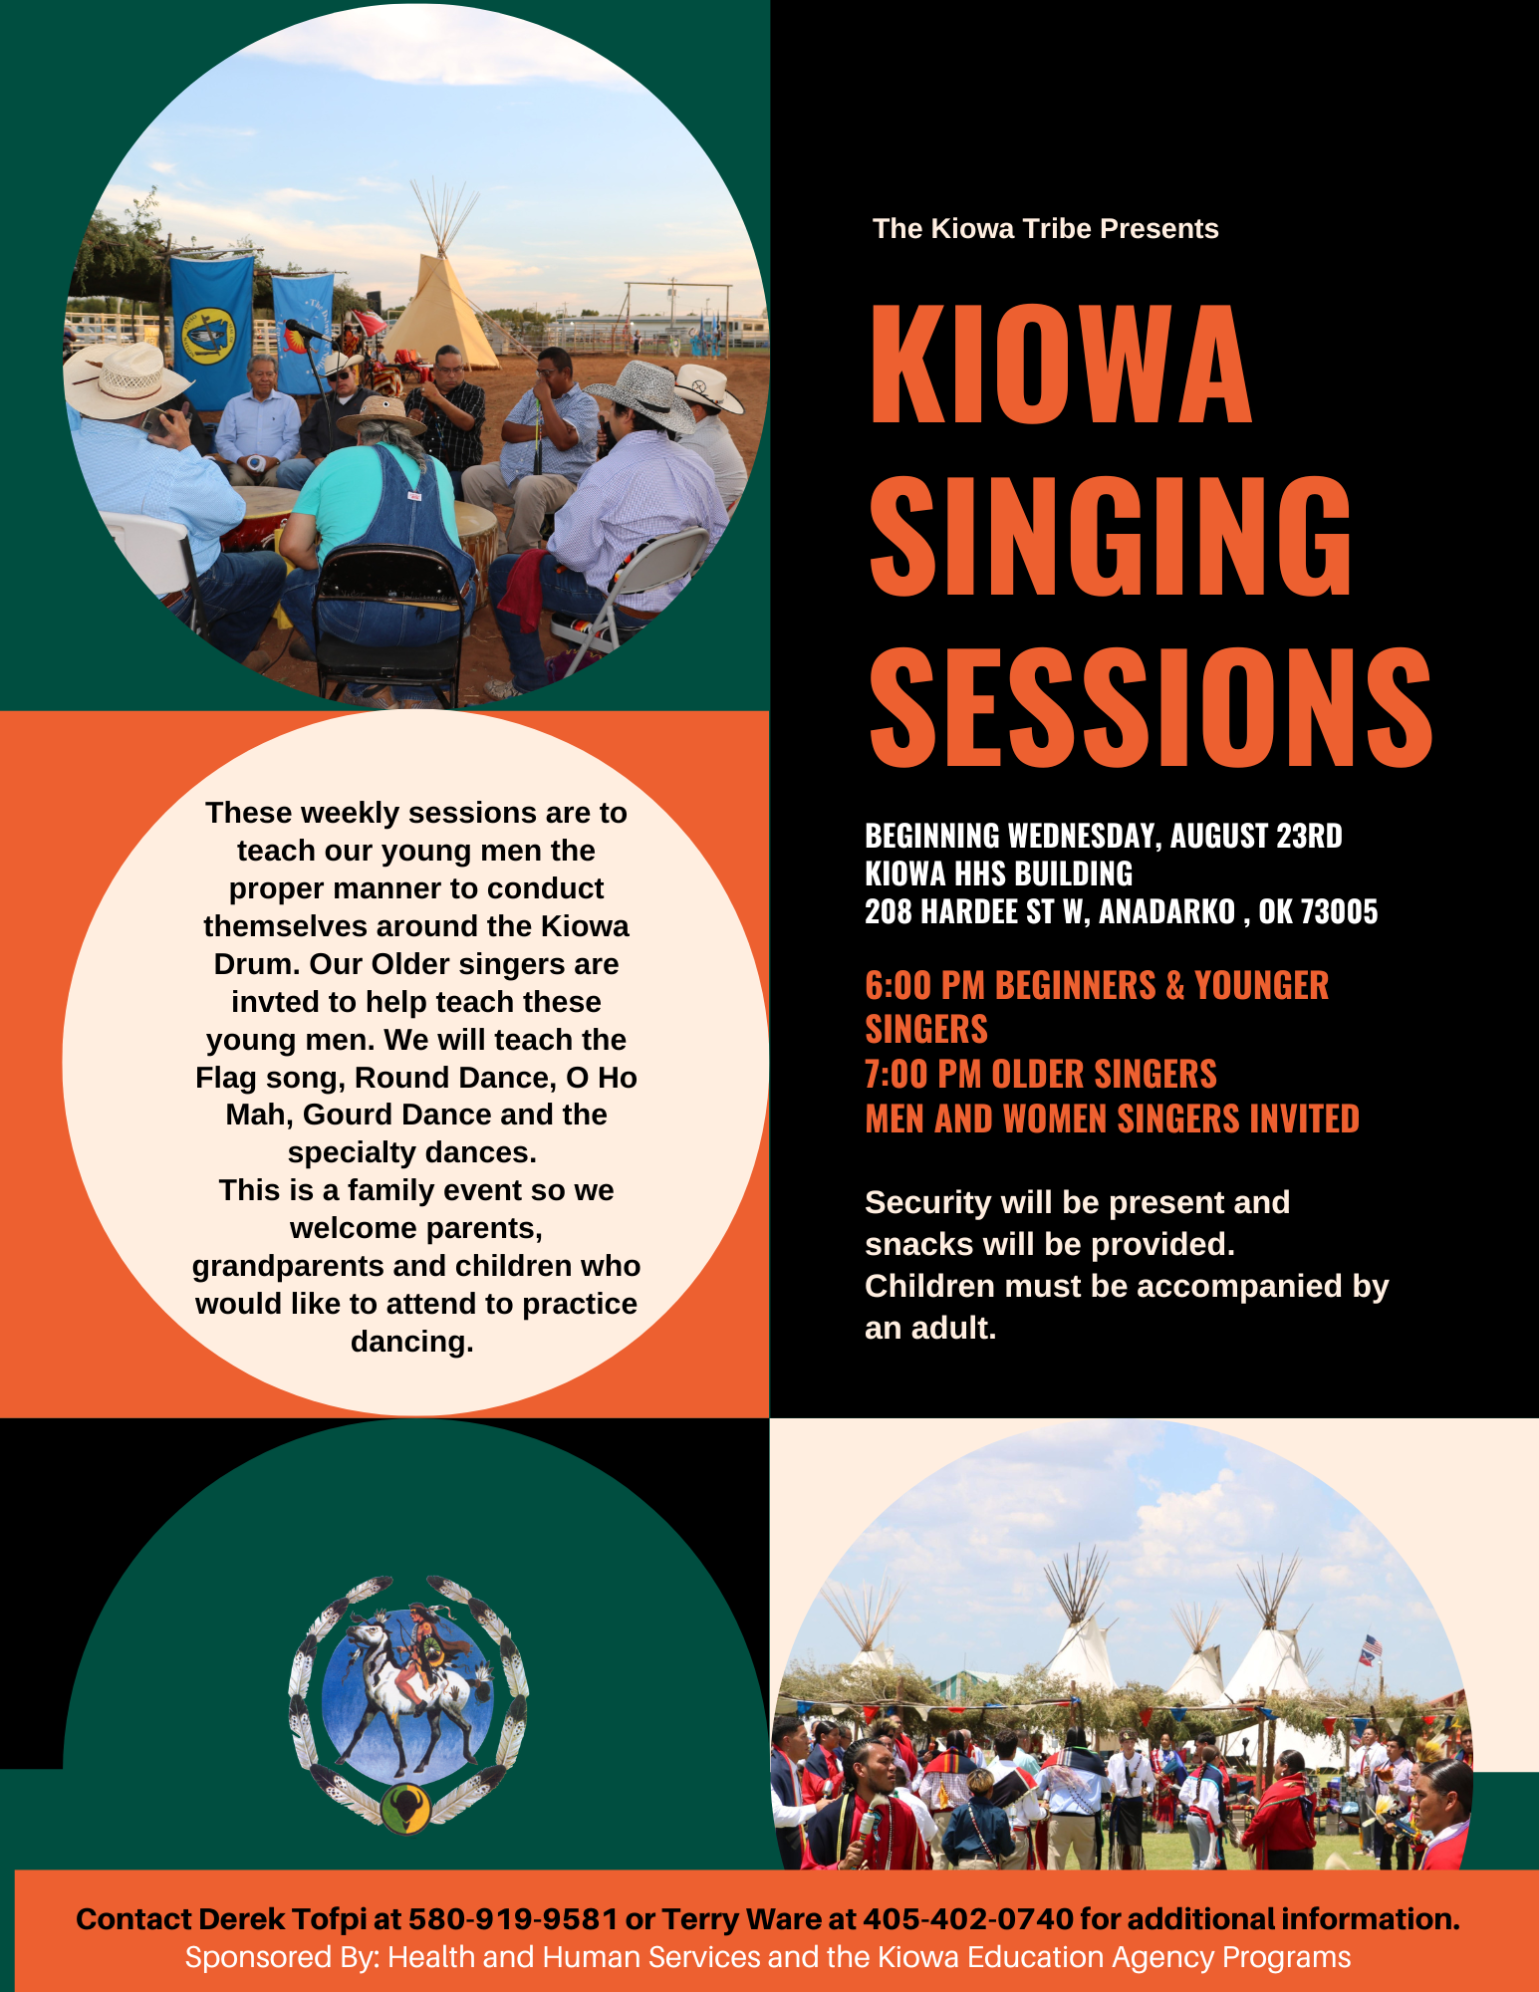 Kiowa Singing